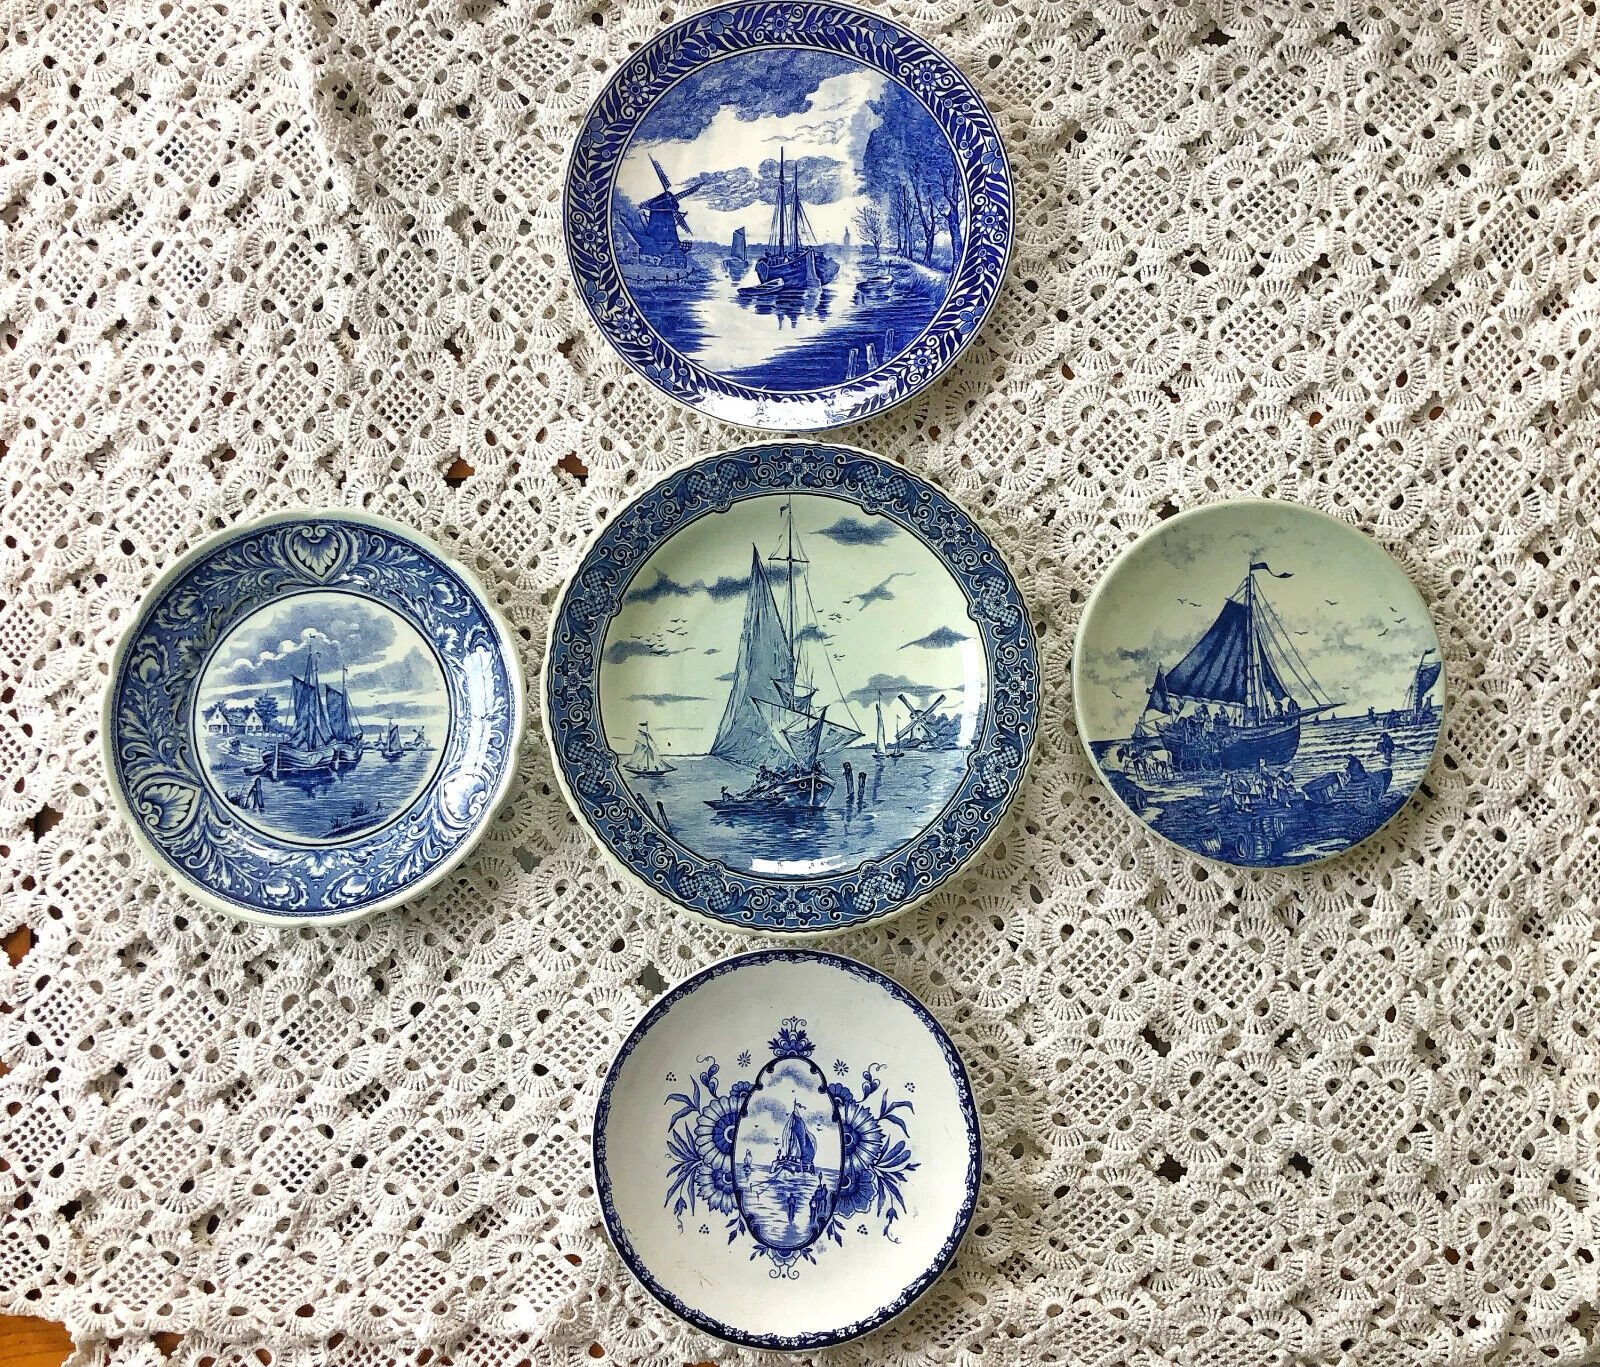 Delft Blue plates (set of 5), ships, sea, fishermen, sailing themed, antique